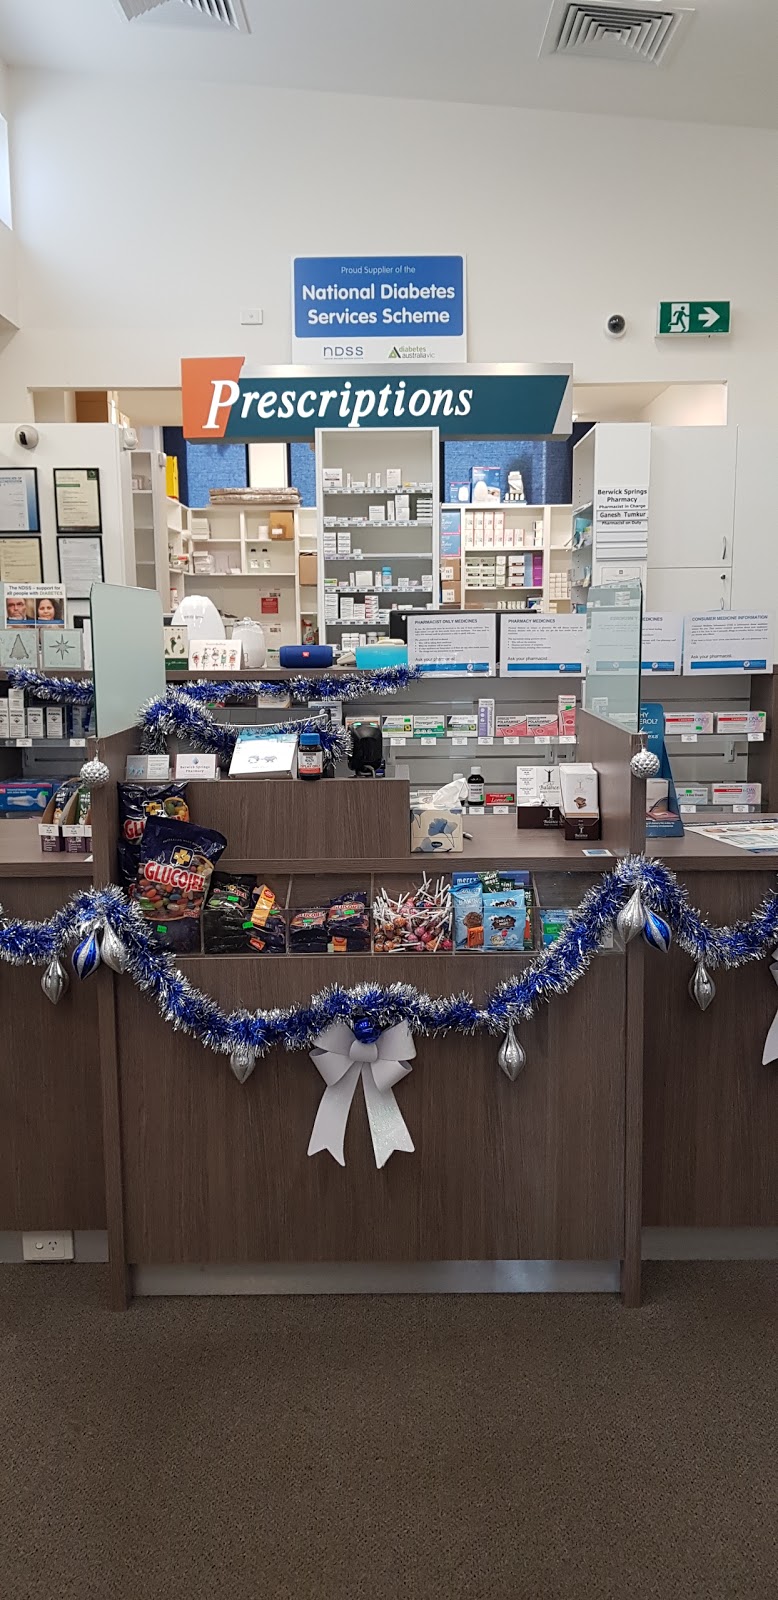 Berwick Springs Pharmacy - Compounding Chemist Berwick | pharmacy | 137 Moondarra Dr, Berwick VIC 3806, Australia | 0397022200 OR +61 3 9702 2200